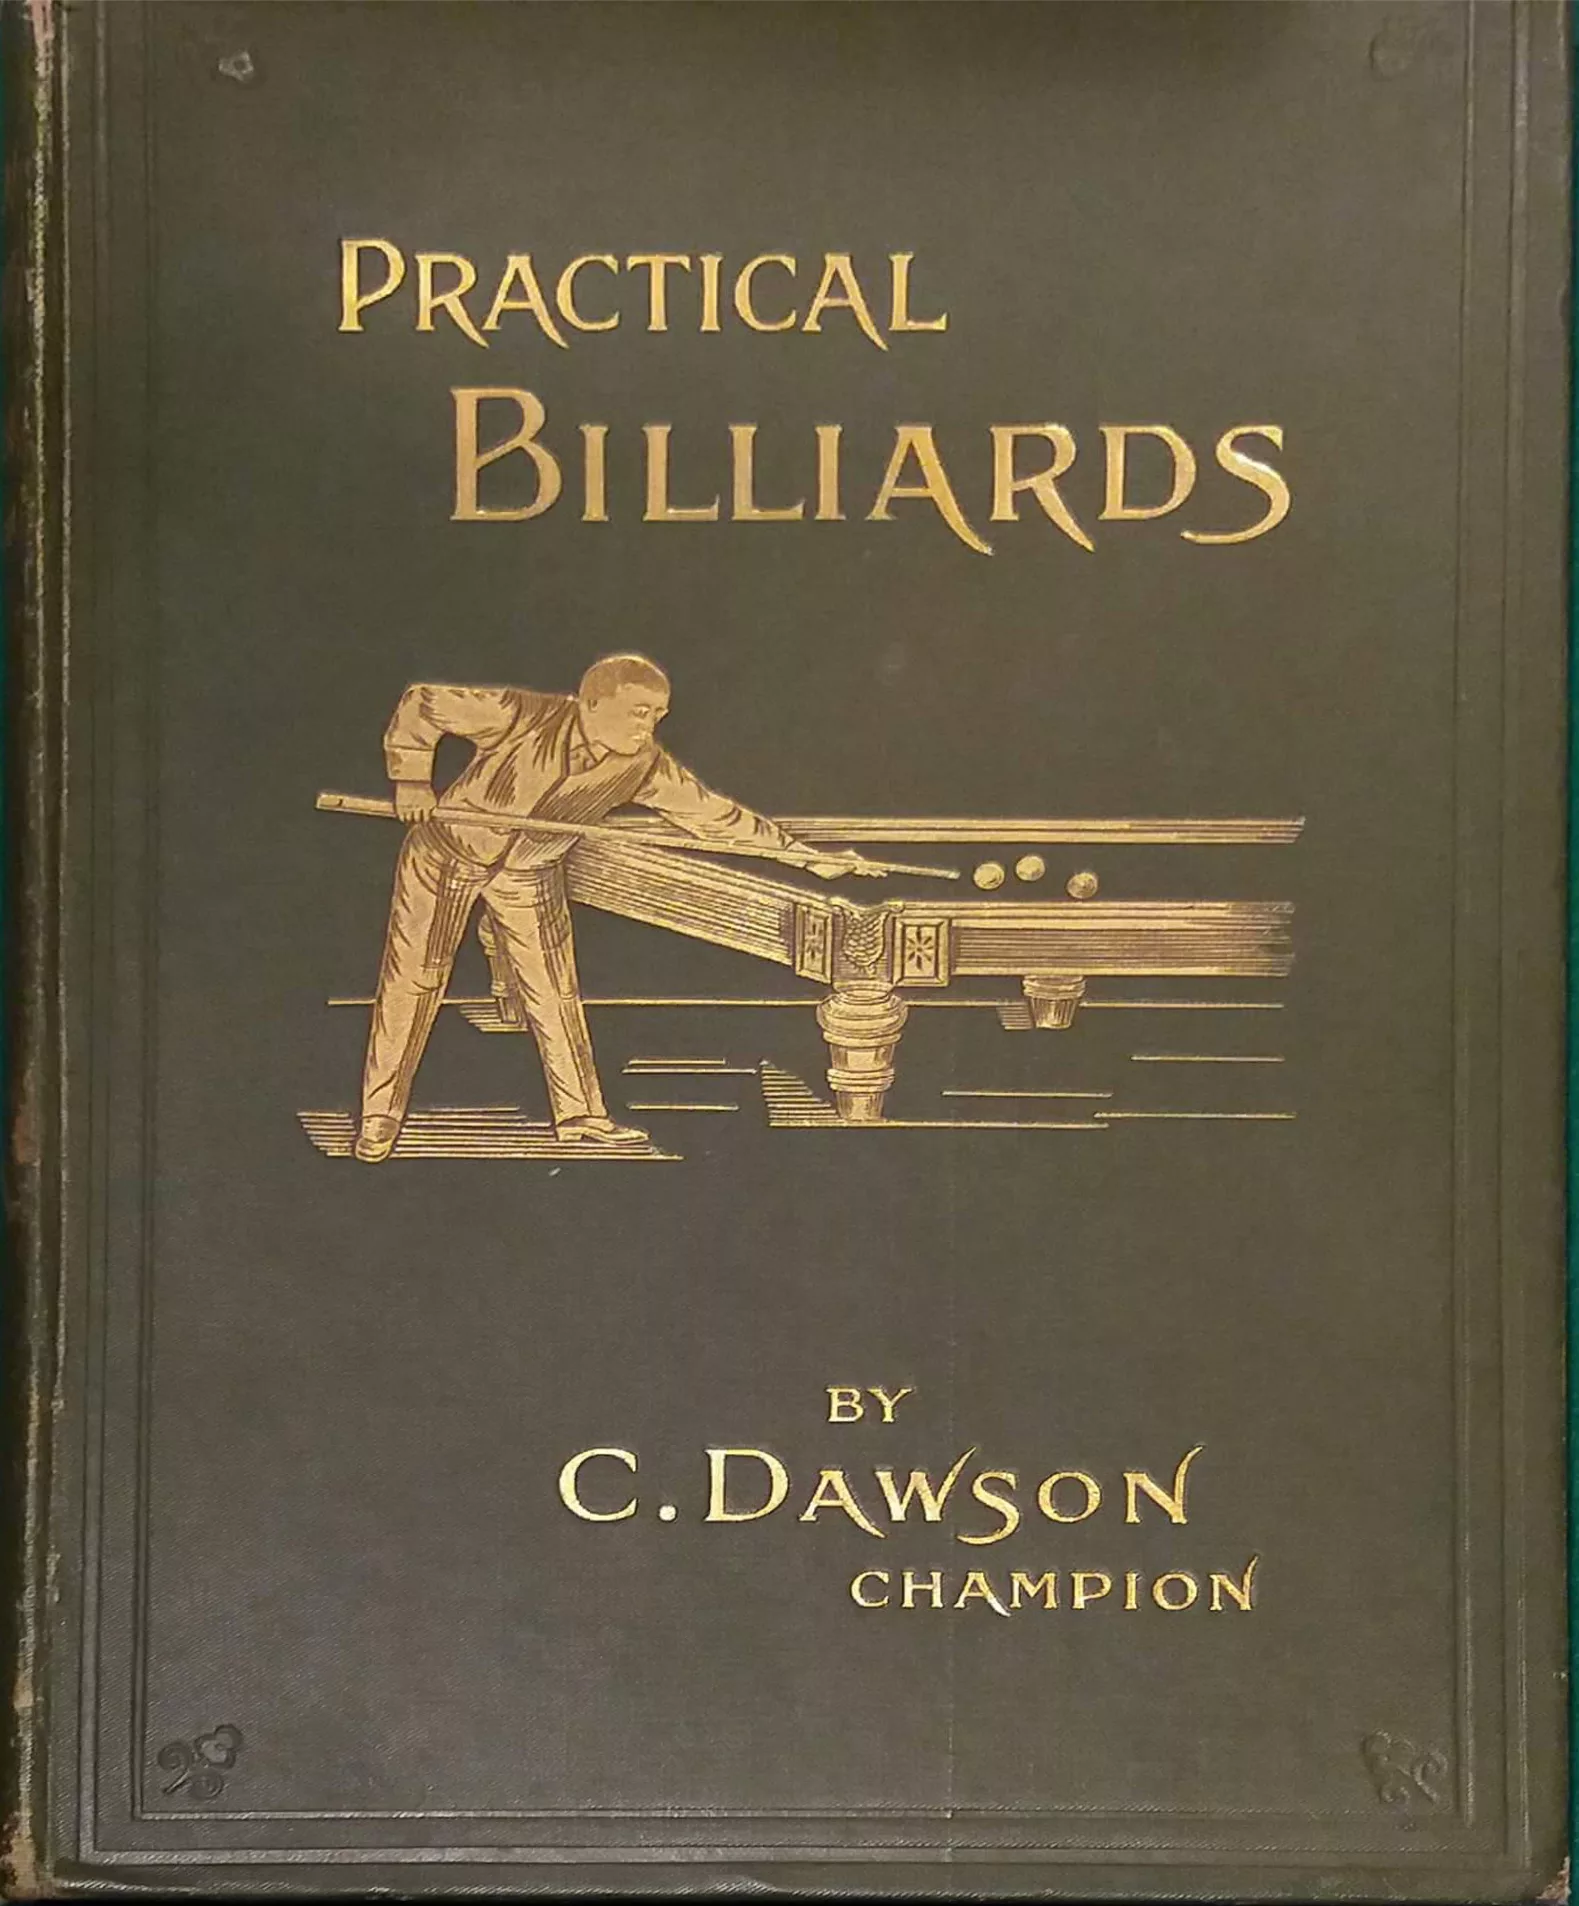 Practical Billiards by Charles Dawson